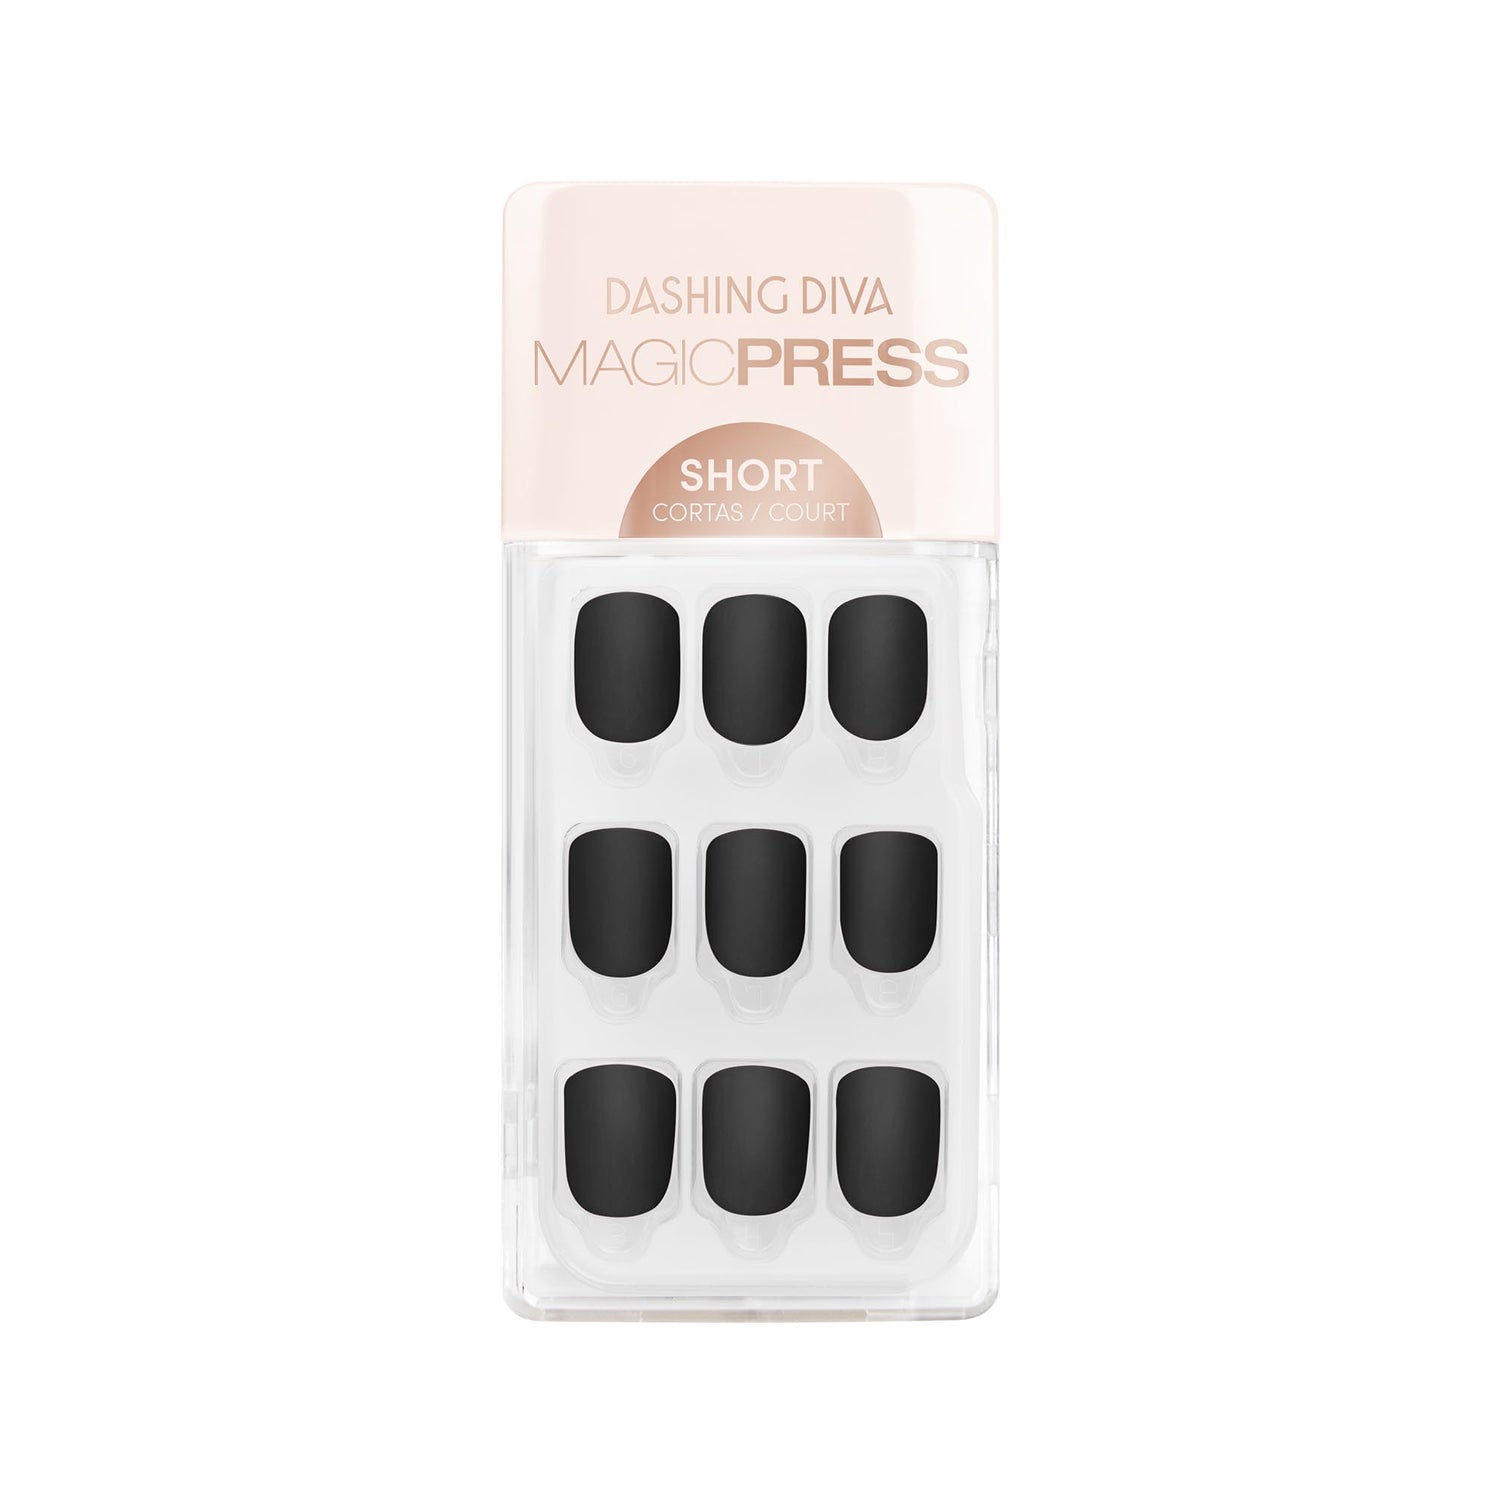 Dashing Diva MAGIC PRESS short, matte black, square press-on gel nails.